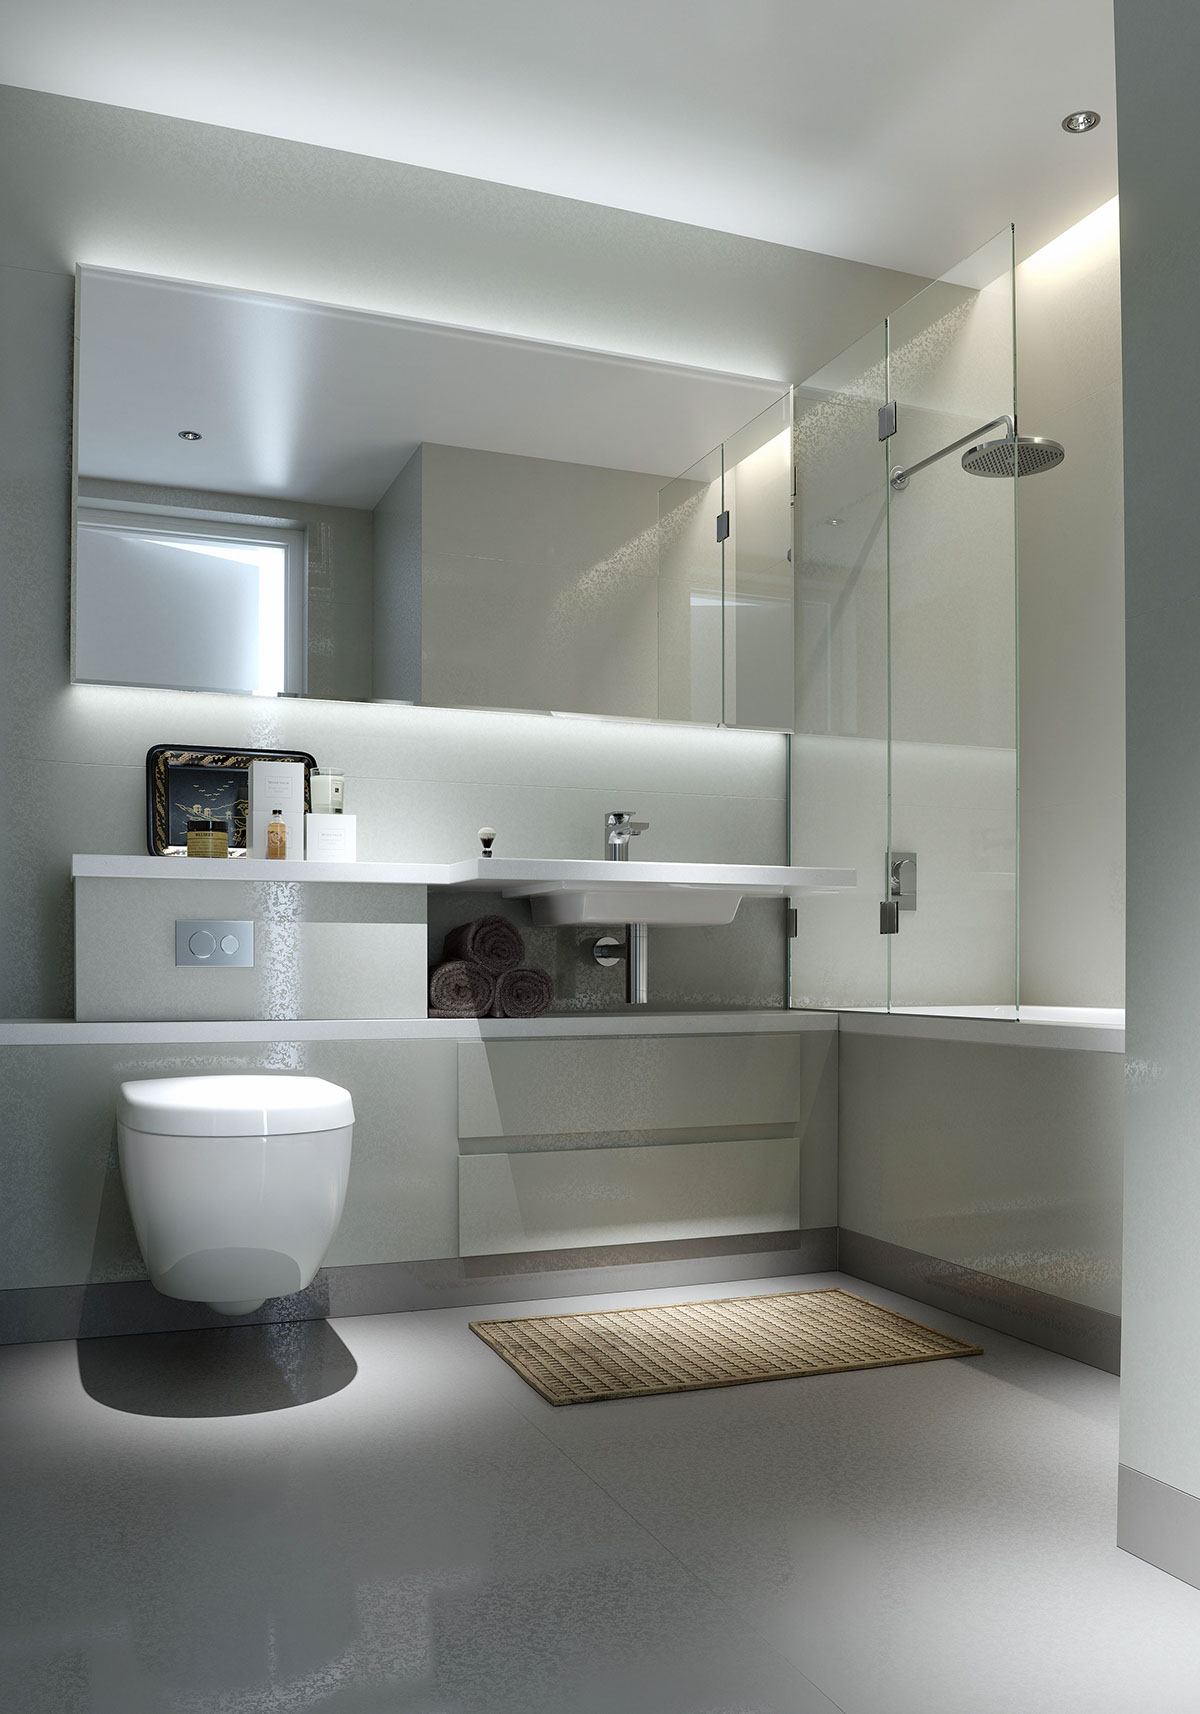 3D CGI visualisation design Interior photorealism contemporary office cgi  livingroom bathroom cgi roomset pikcells   kitchen cgi